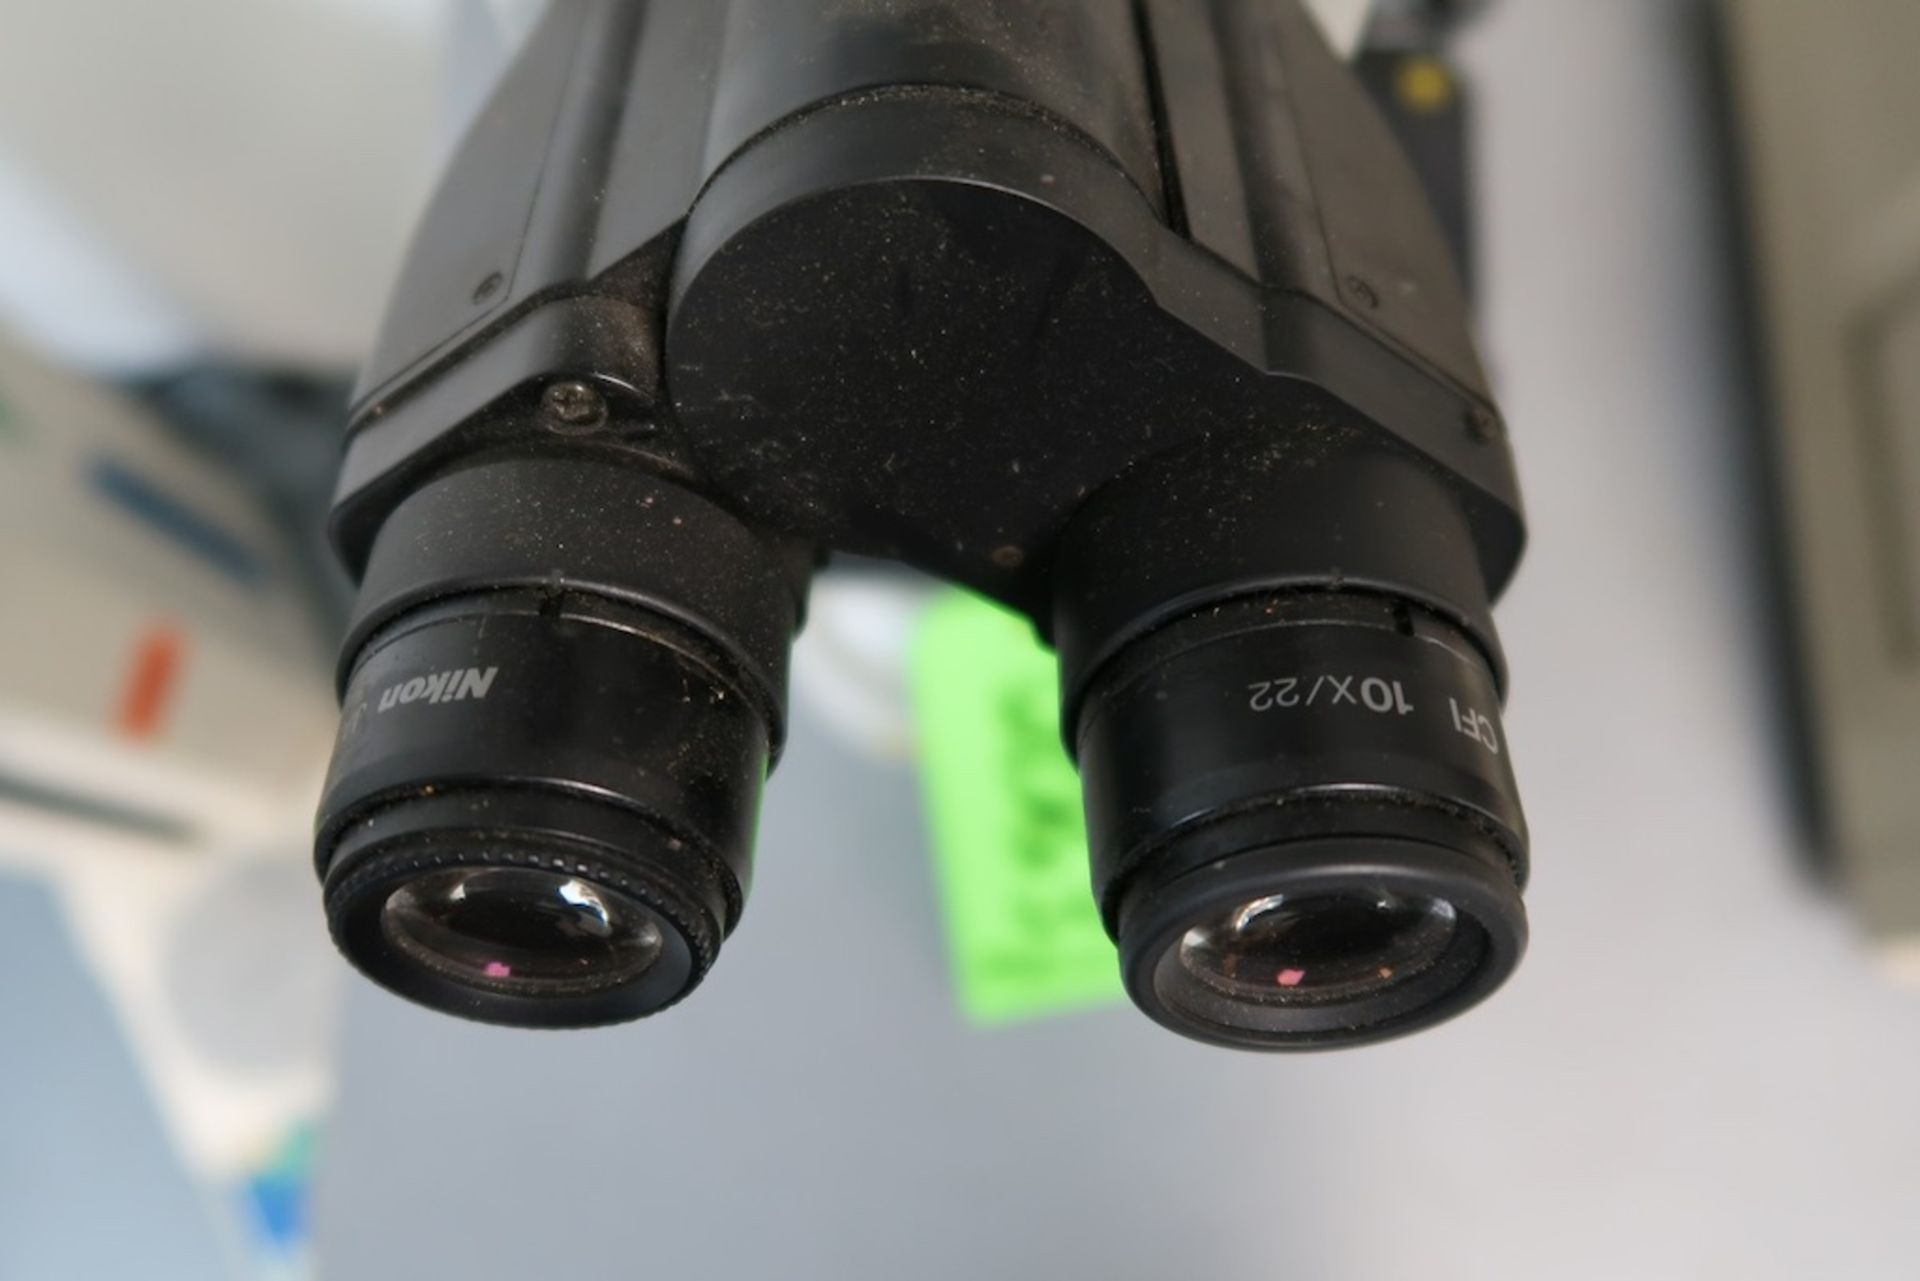 Nikon Eclipse 55i Benchtop Microscope - Image 4 of 5